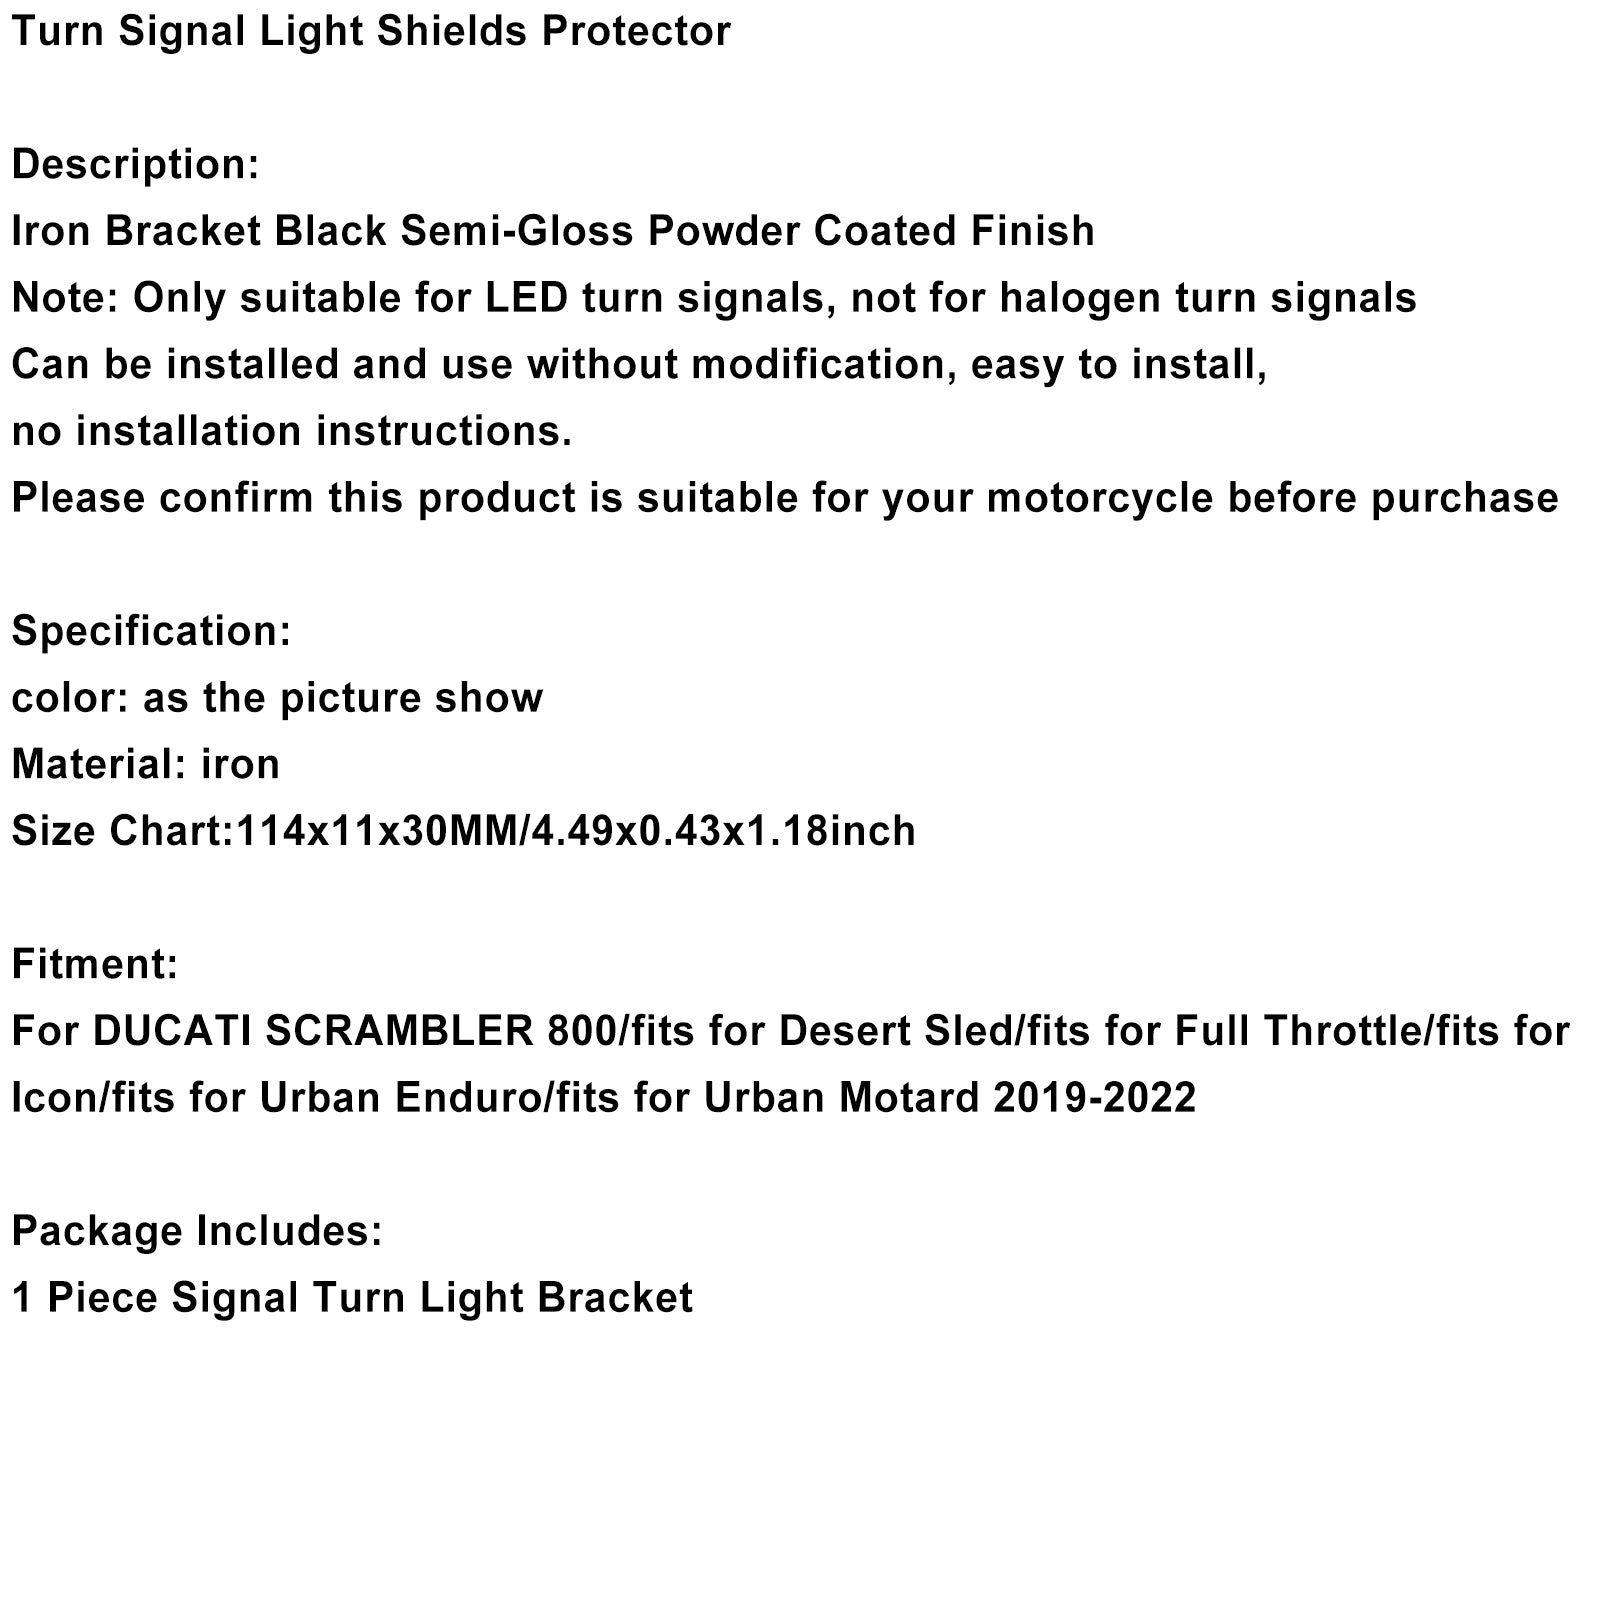 Turn Signal Light Shields Protector for Ducati Scrambler 800 2019-2022 Generic